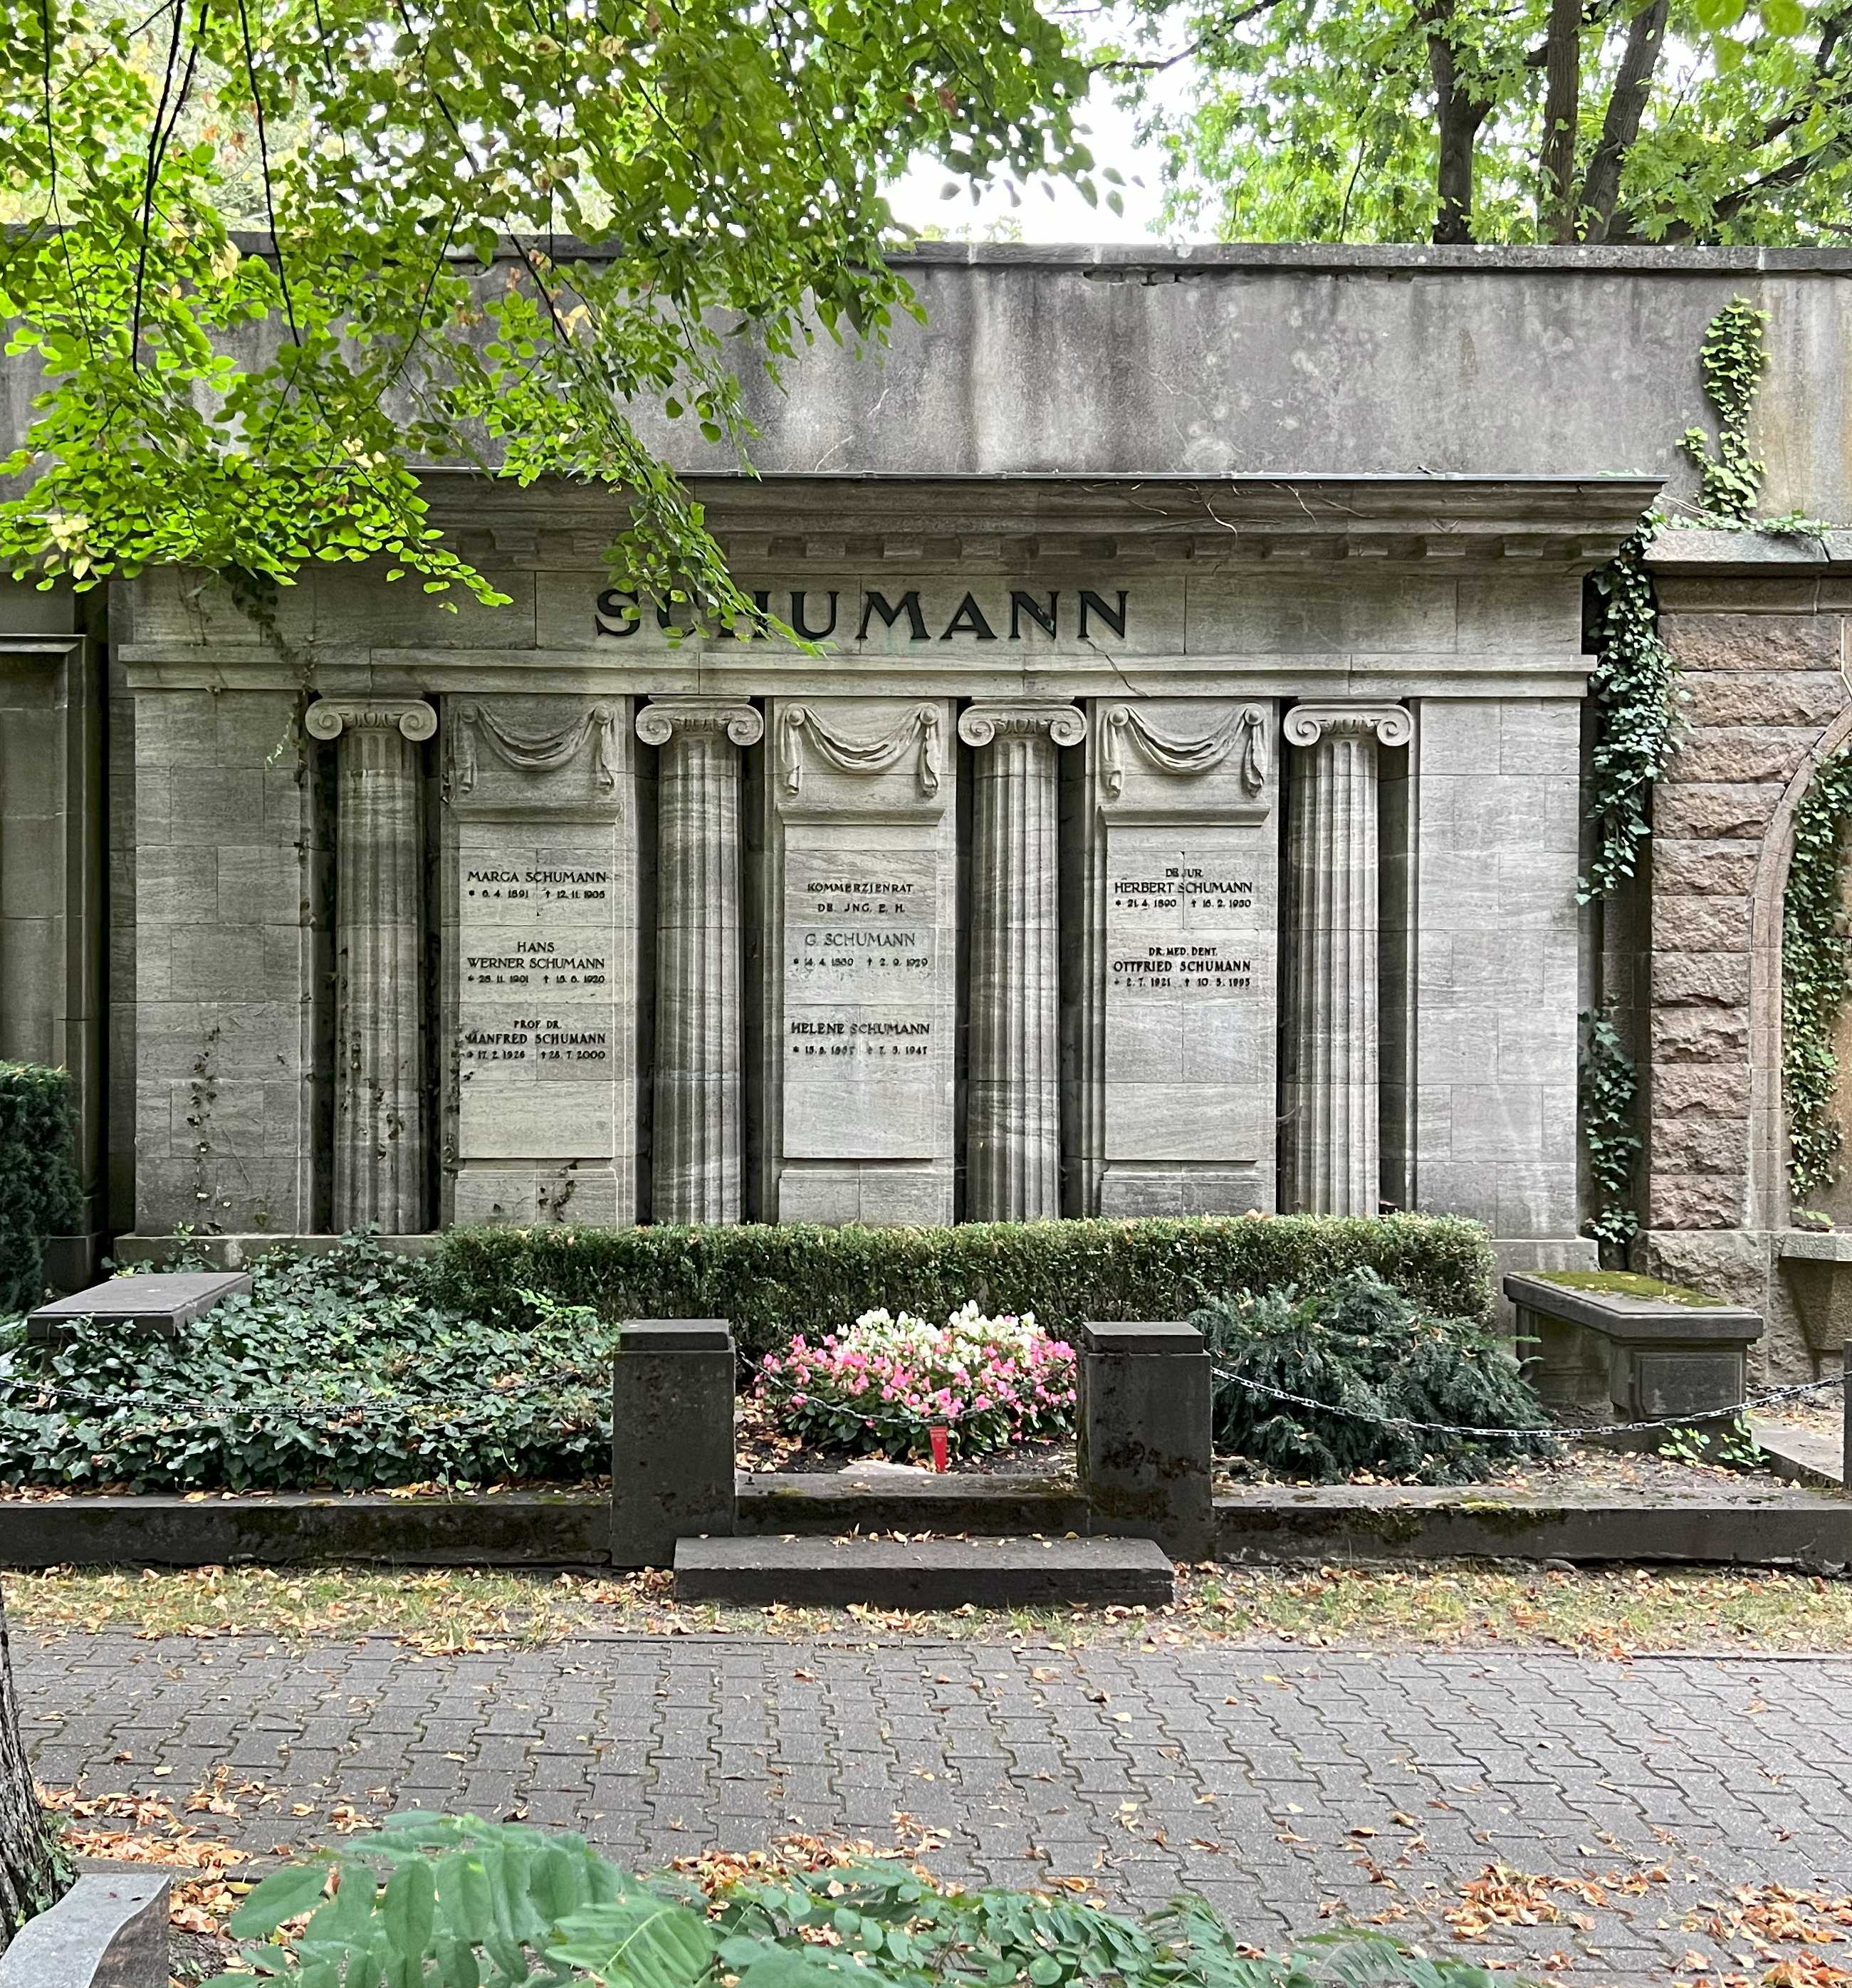 Grabstein Herbert Schumann, Friedhof Wilmersdorf, Berlin